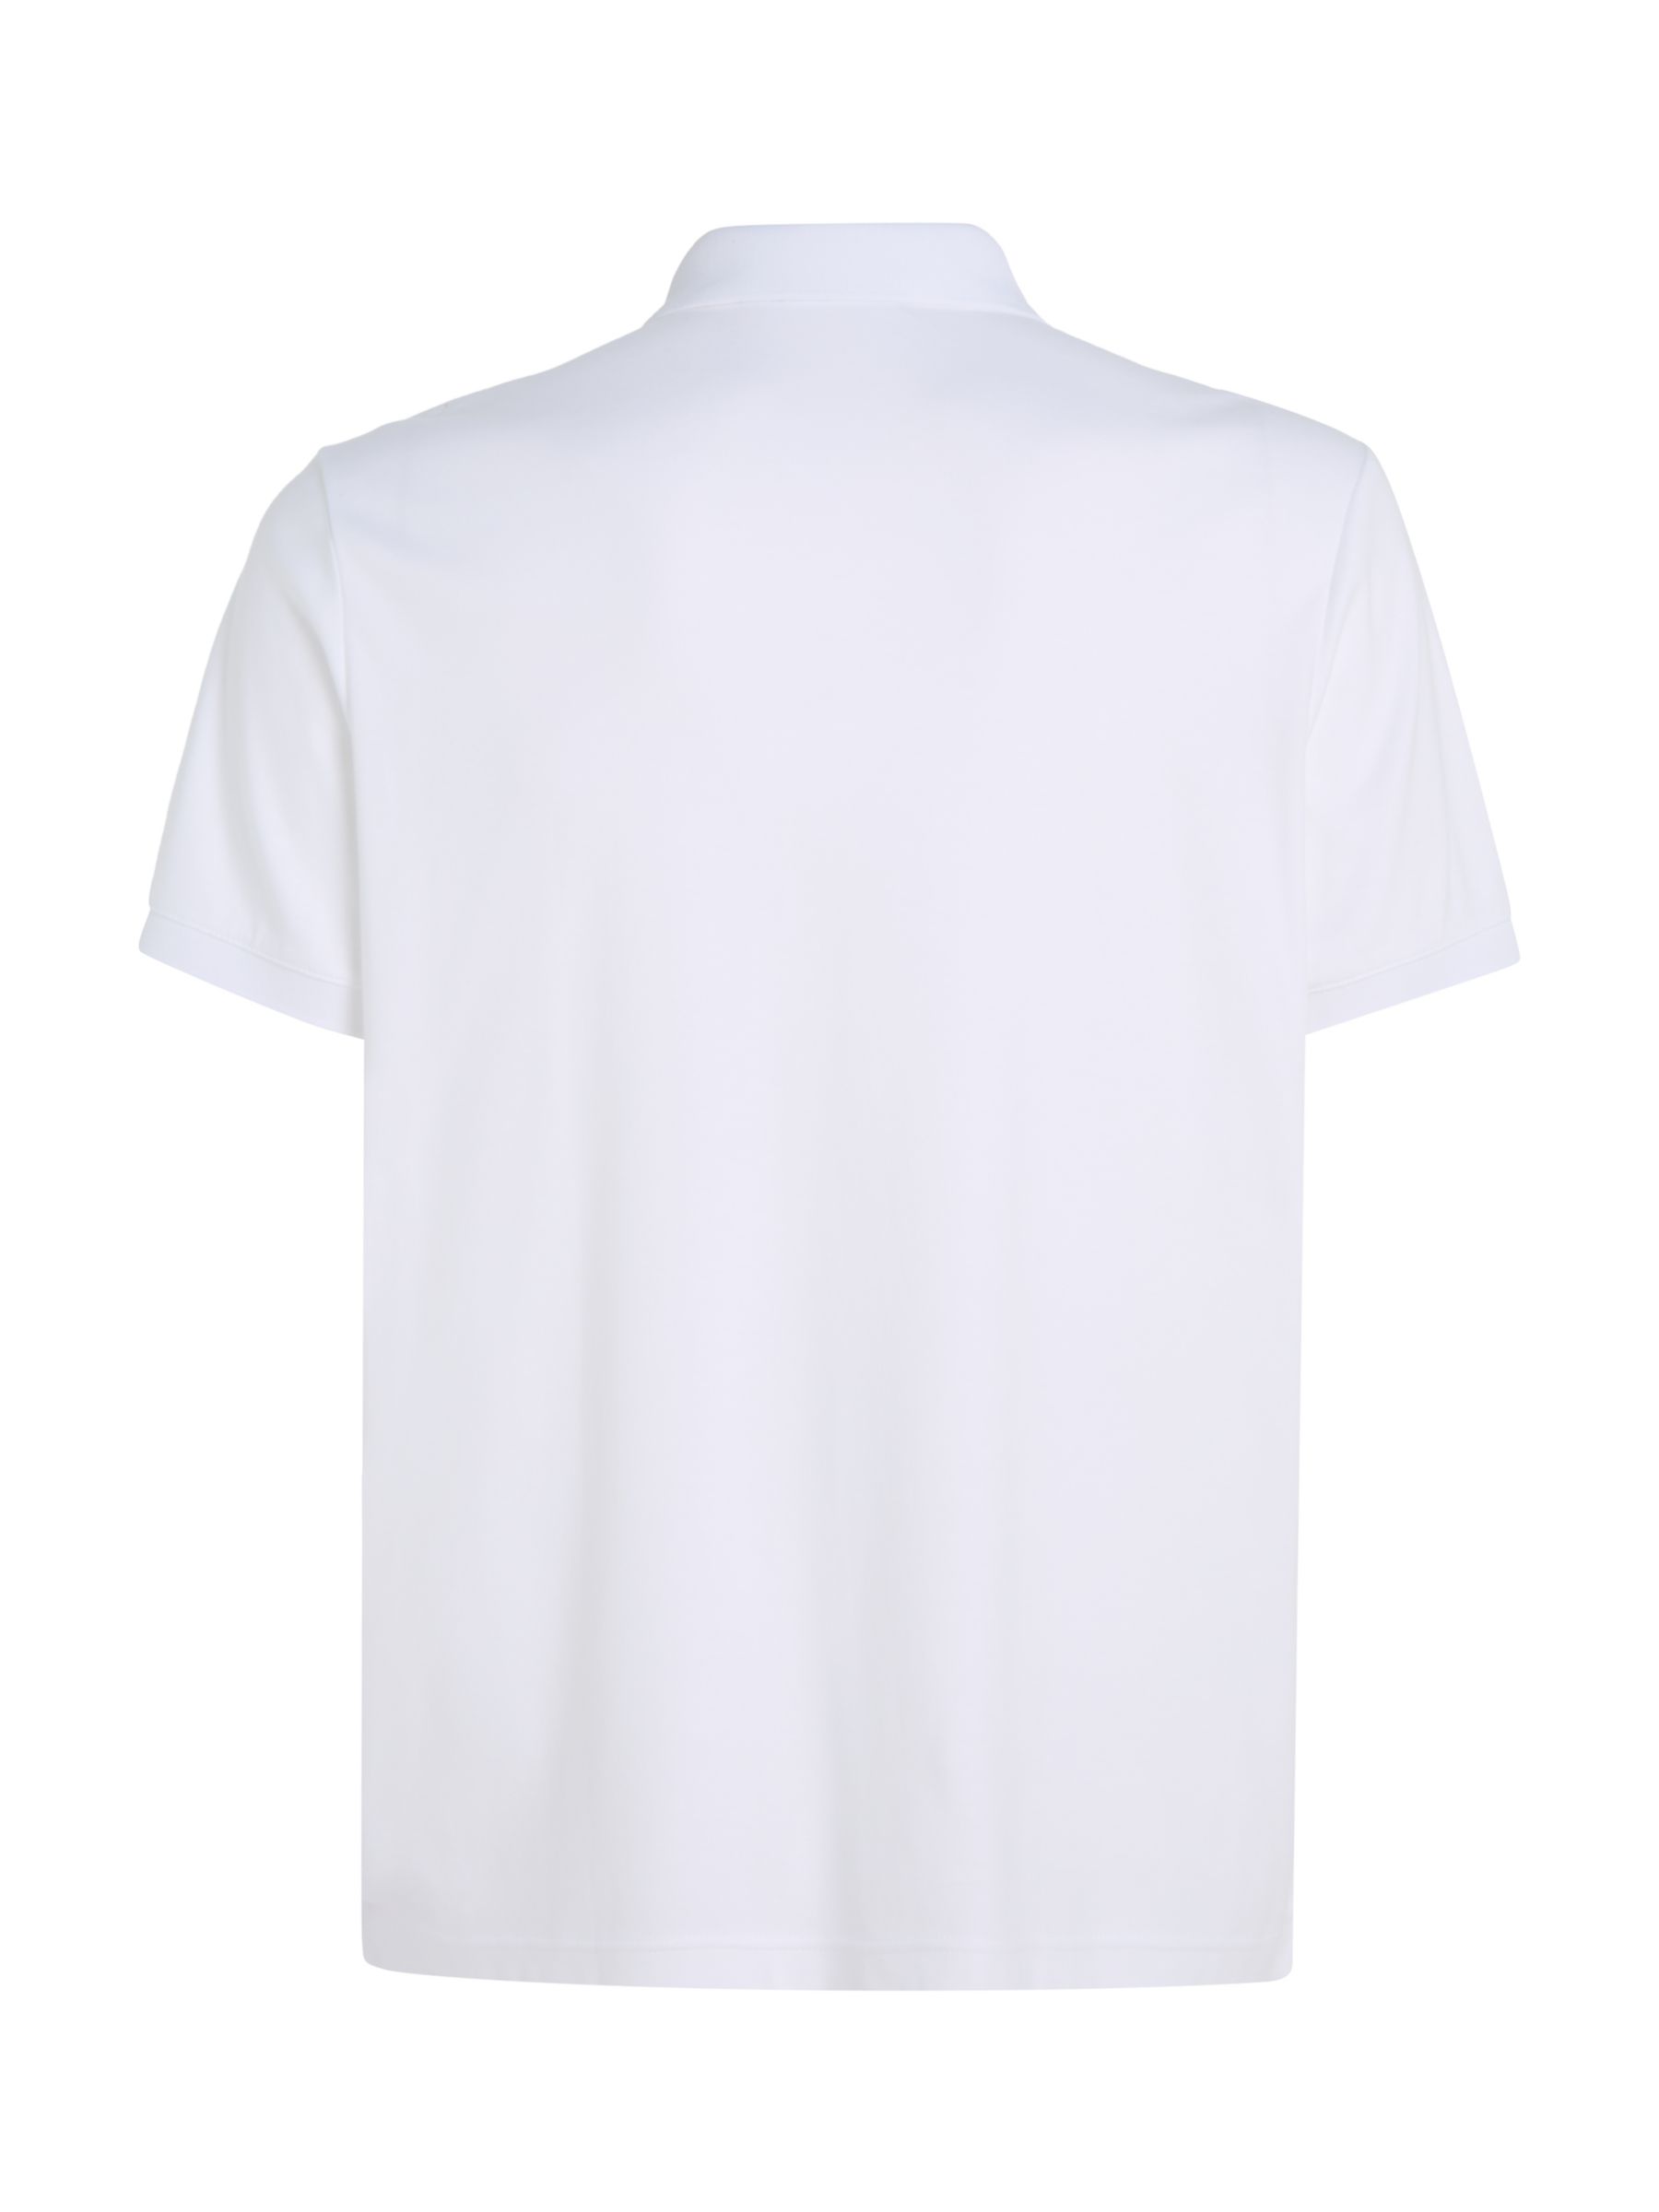 Calvin Klein Cotton Zip Polo Top, Bright White, XL